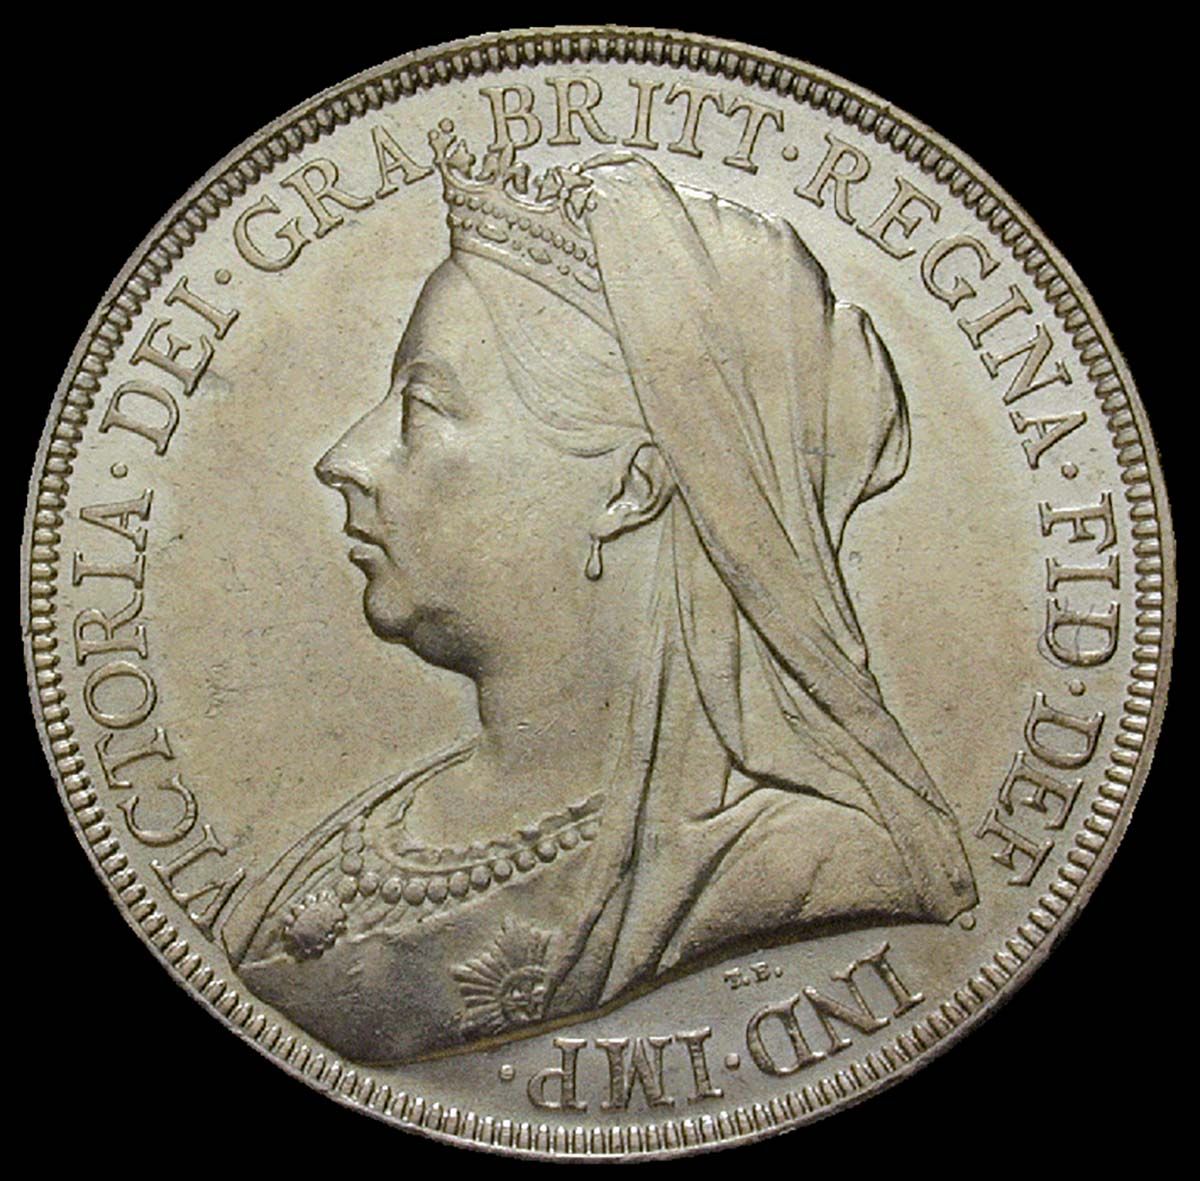 Marea Britanie – avers 1 coroană 1896 imagine obtinuta prin bunavoința Money Museum Zurich 